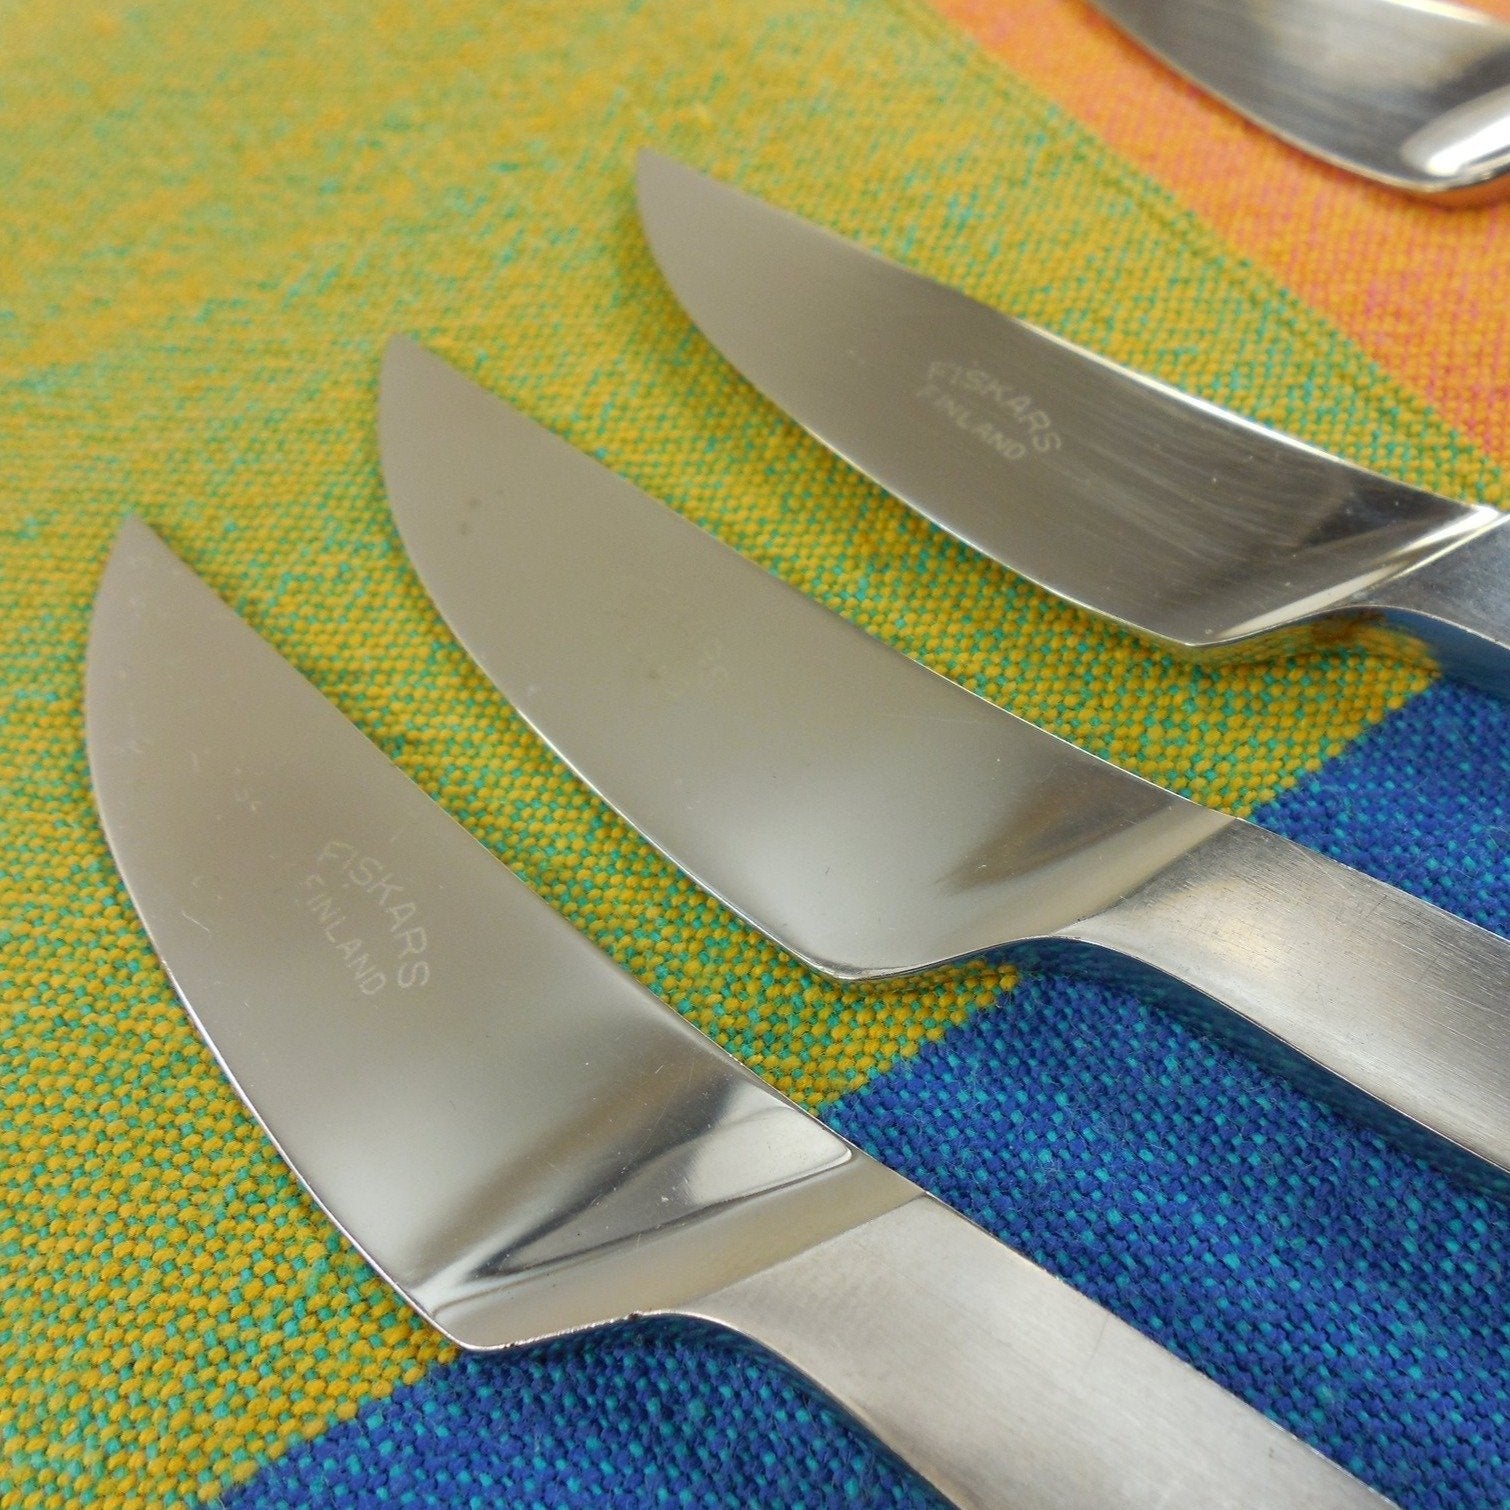 Fiskars Finland - Triennale Stainless Knives - Mid Century Modern Flatware... blade view